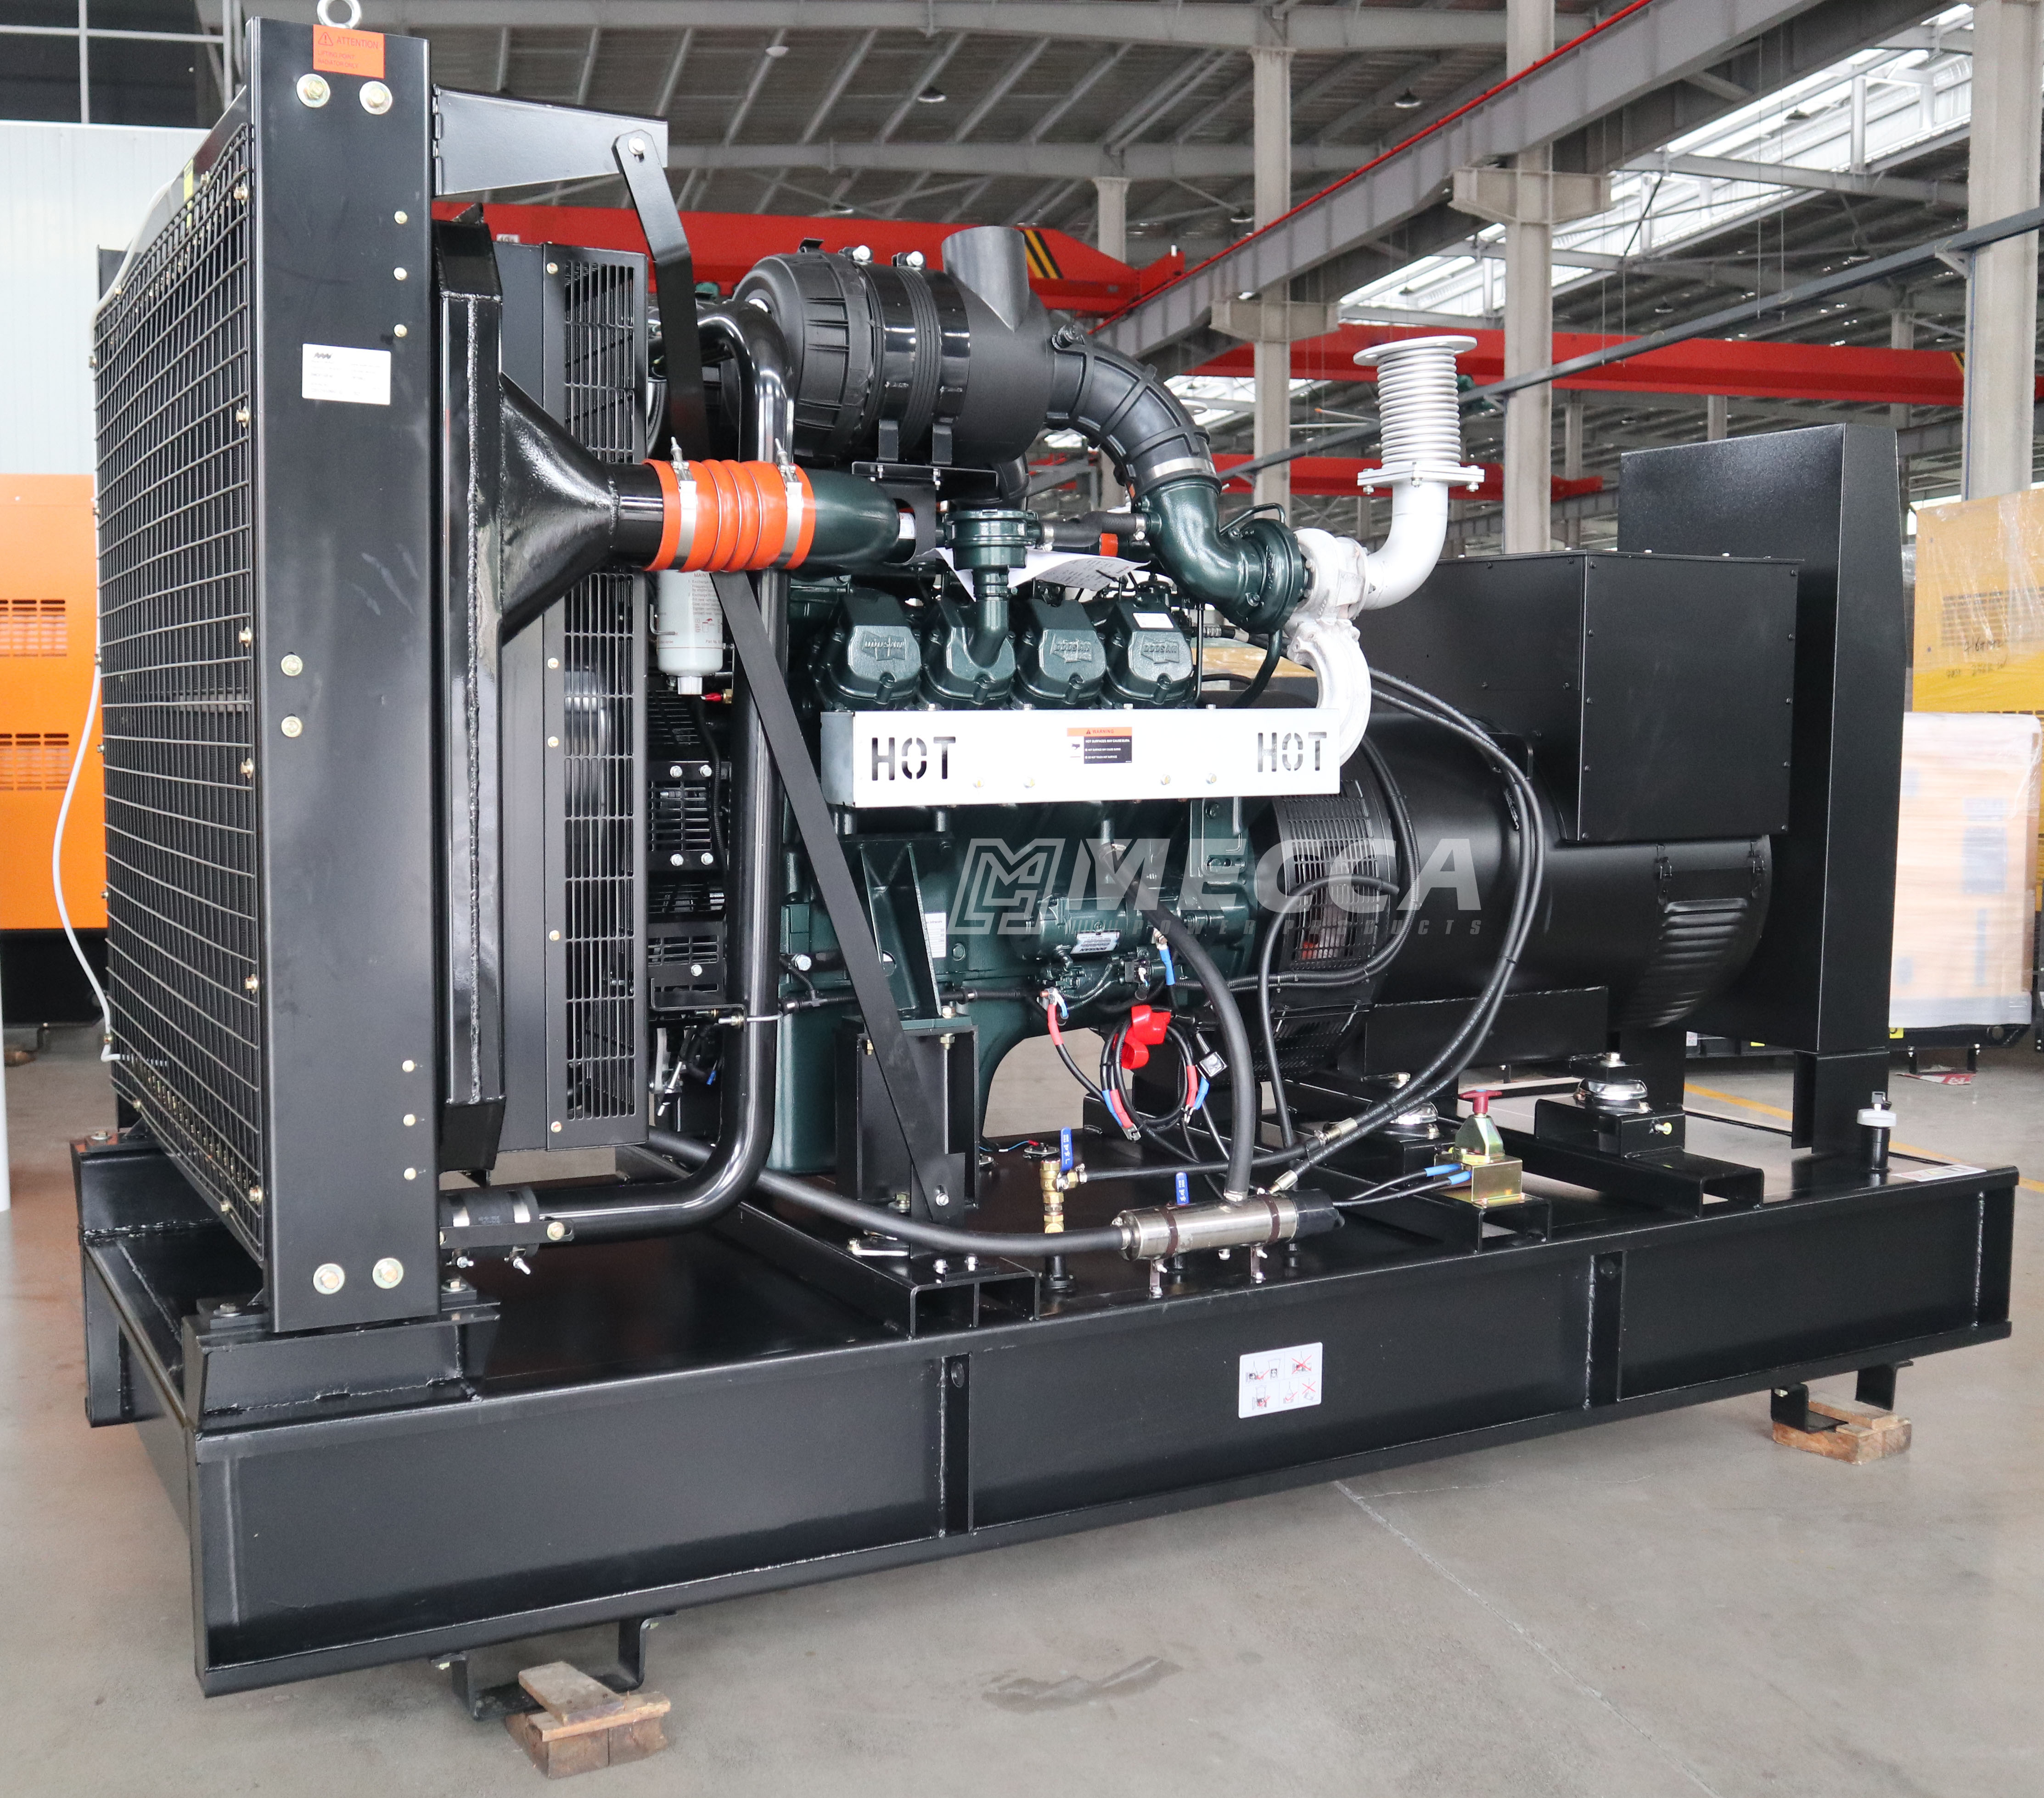 750KVA Continuous DOOSAN Diesel Generator for Industrial